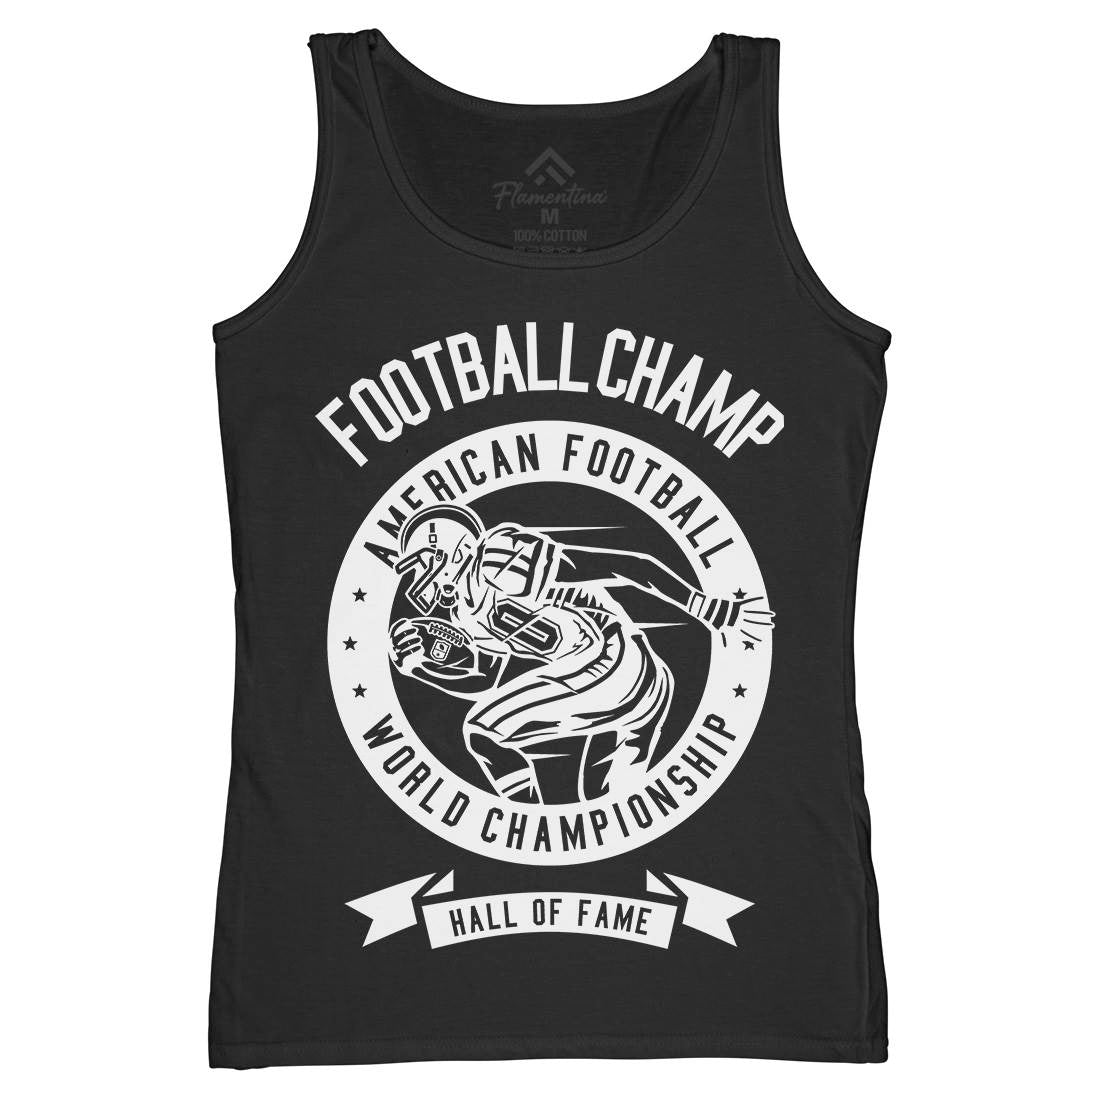 Football Champ Womens Organic Tank Top Vest Sport B541